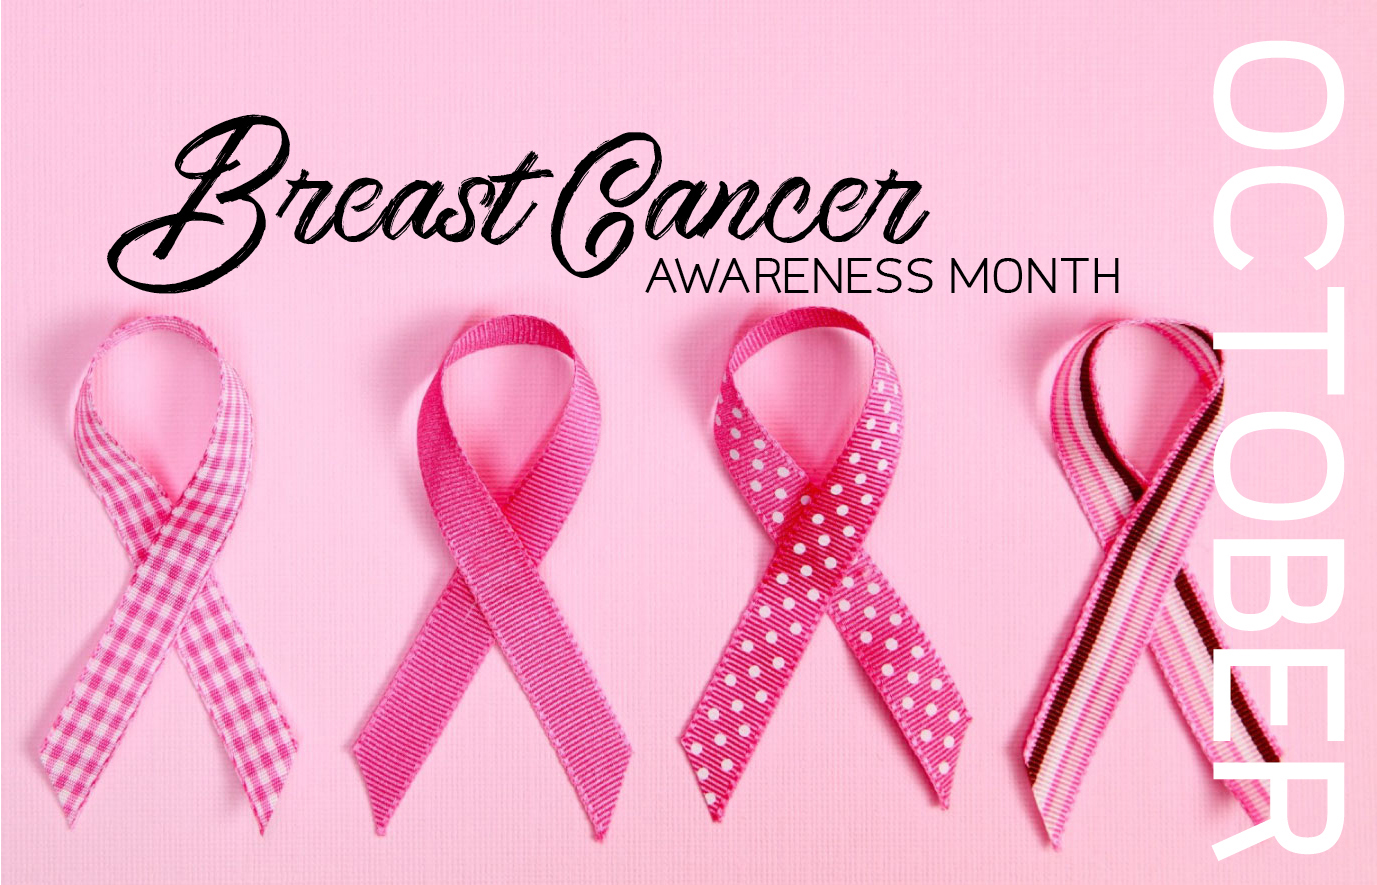 breast cancer awareness month October, bay babes